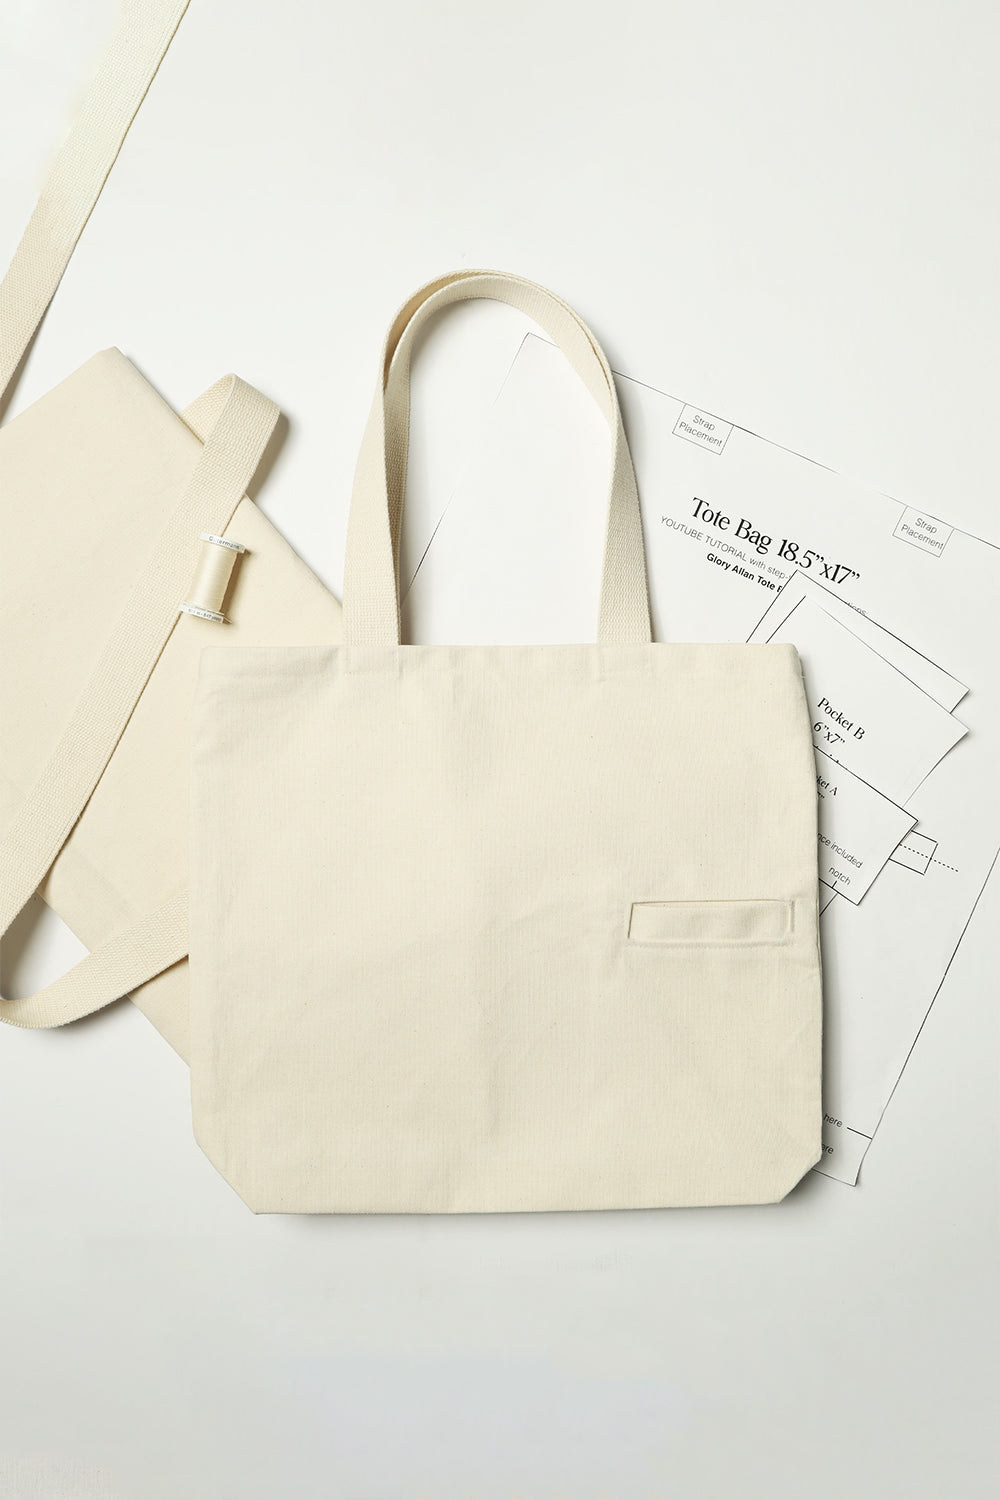 Beginners Sewing Kit: Make a tote bag